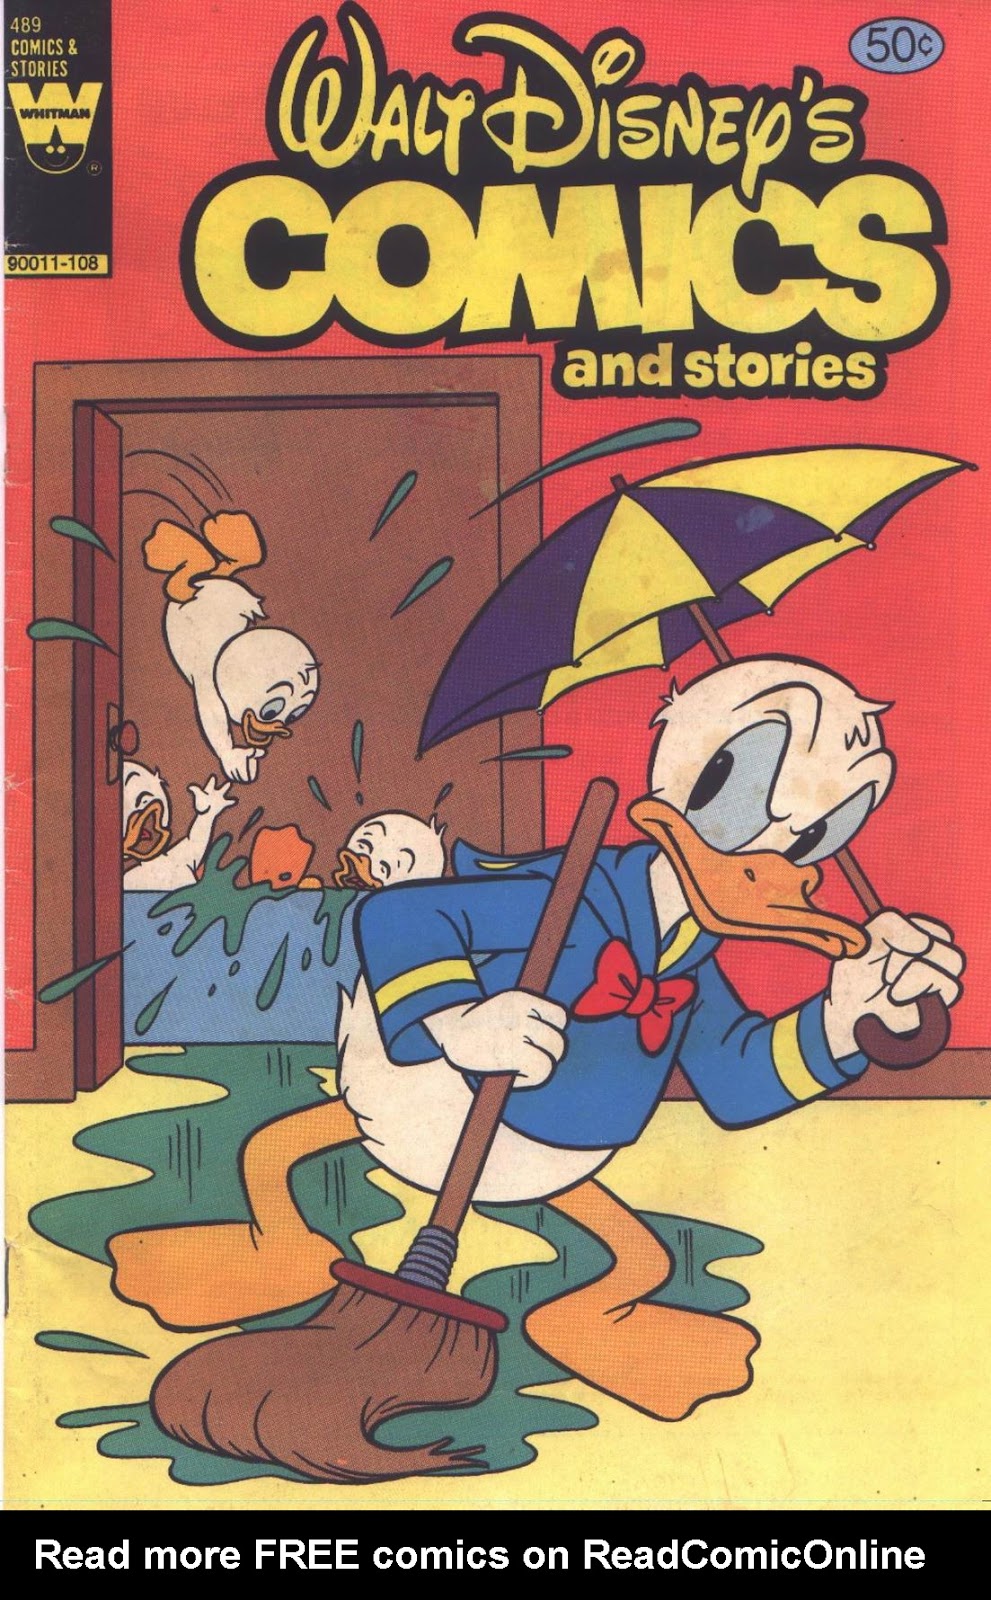 Walt Disney's Comics and Stories 489 Page 1